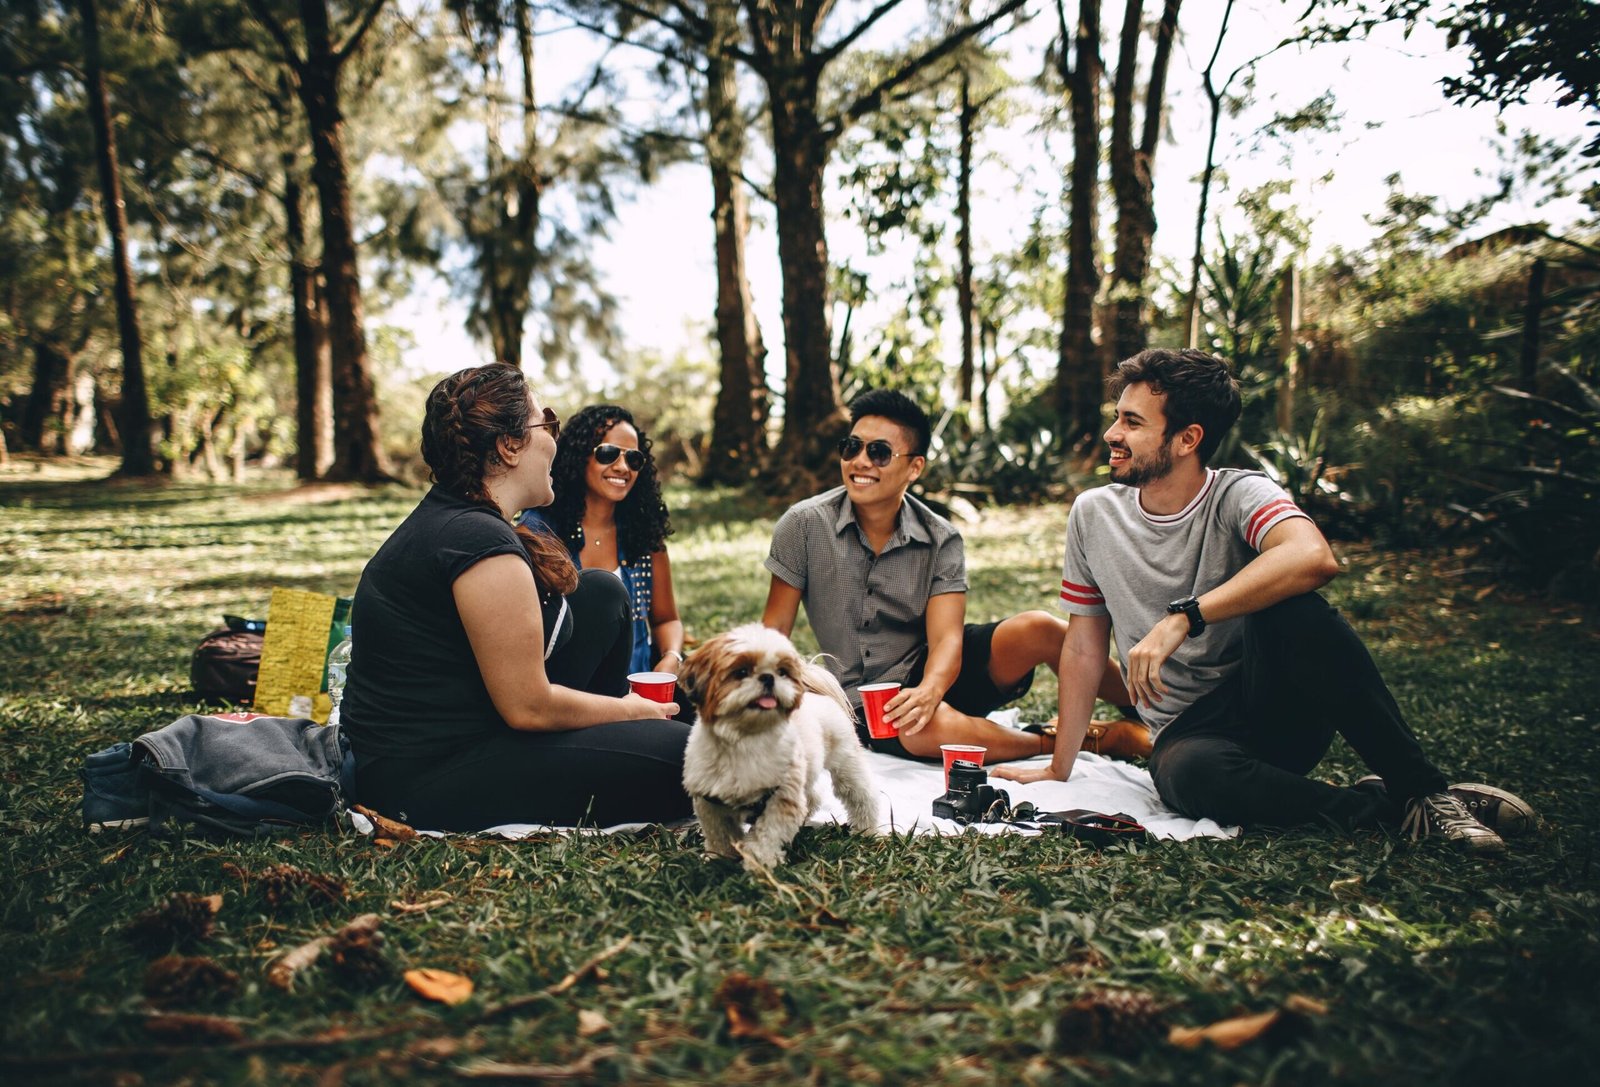 Tips for safer picnics